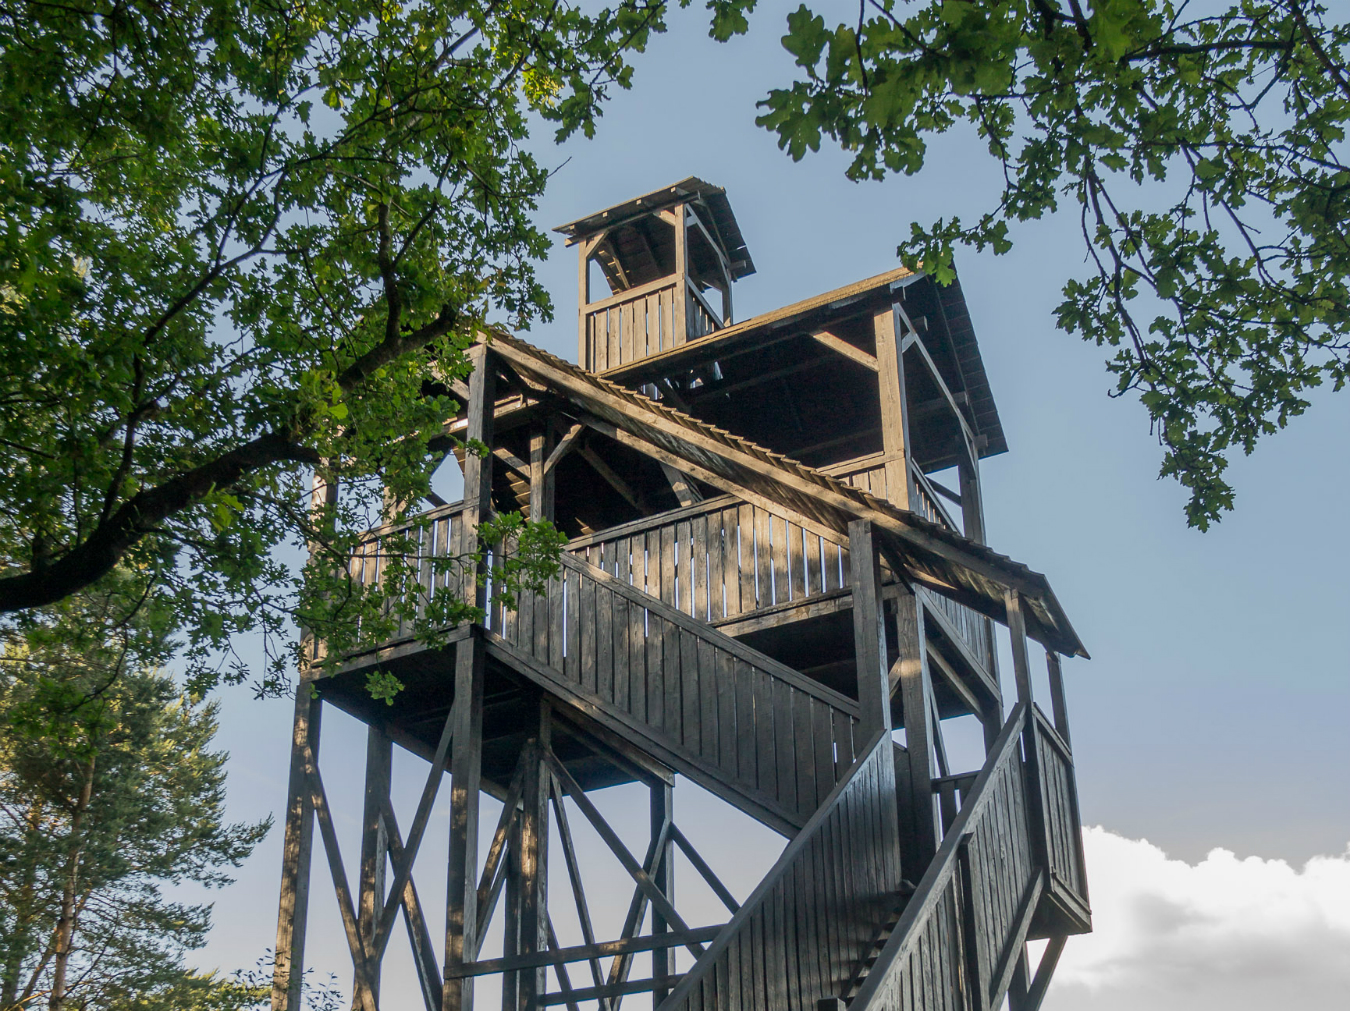 Wooden observation tower at Dondersummerveld